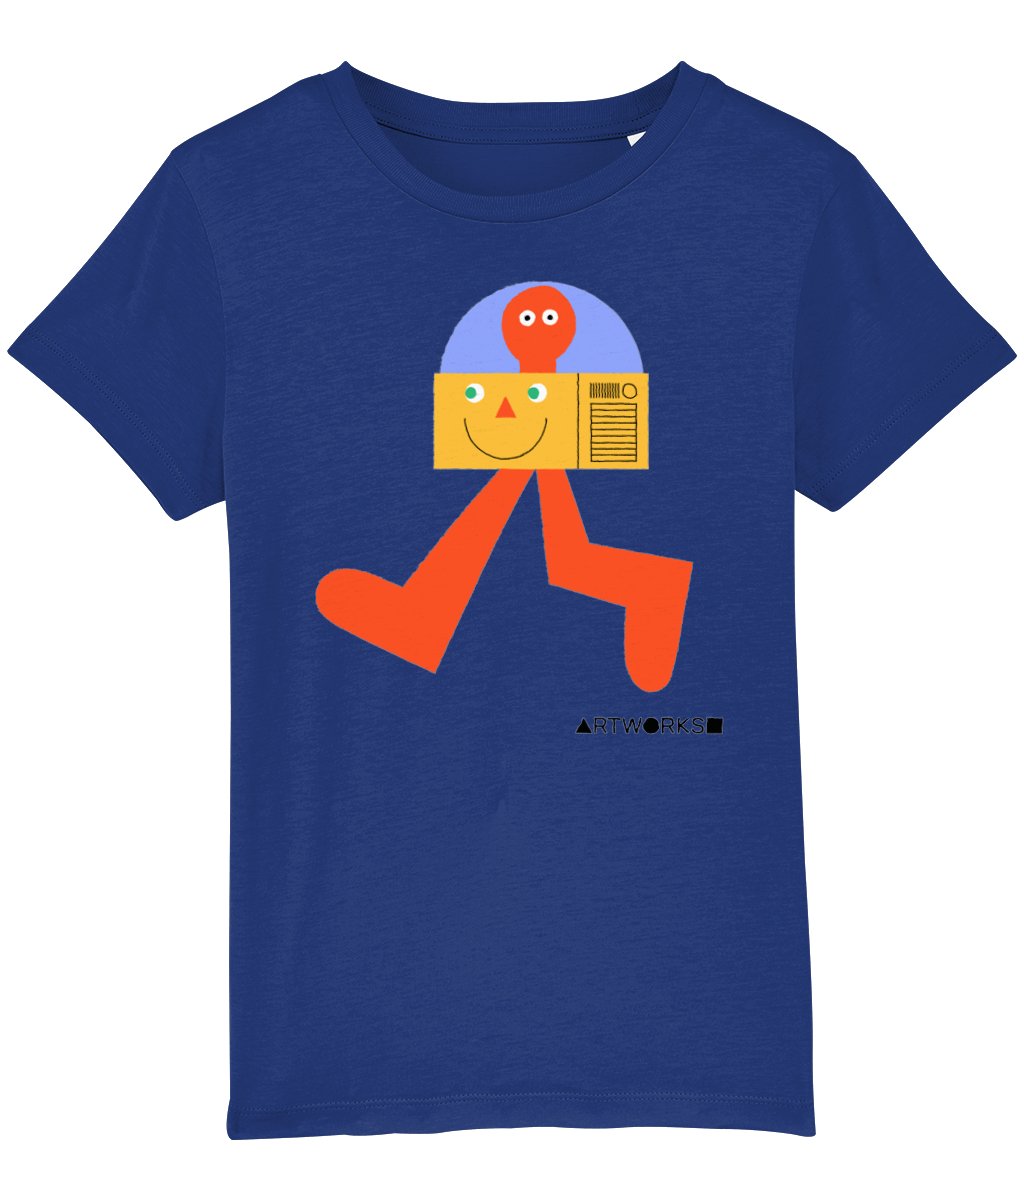 Robot T-shirt - Artworks Clothing